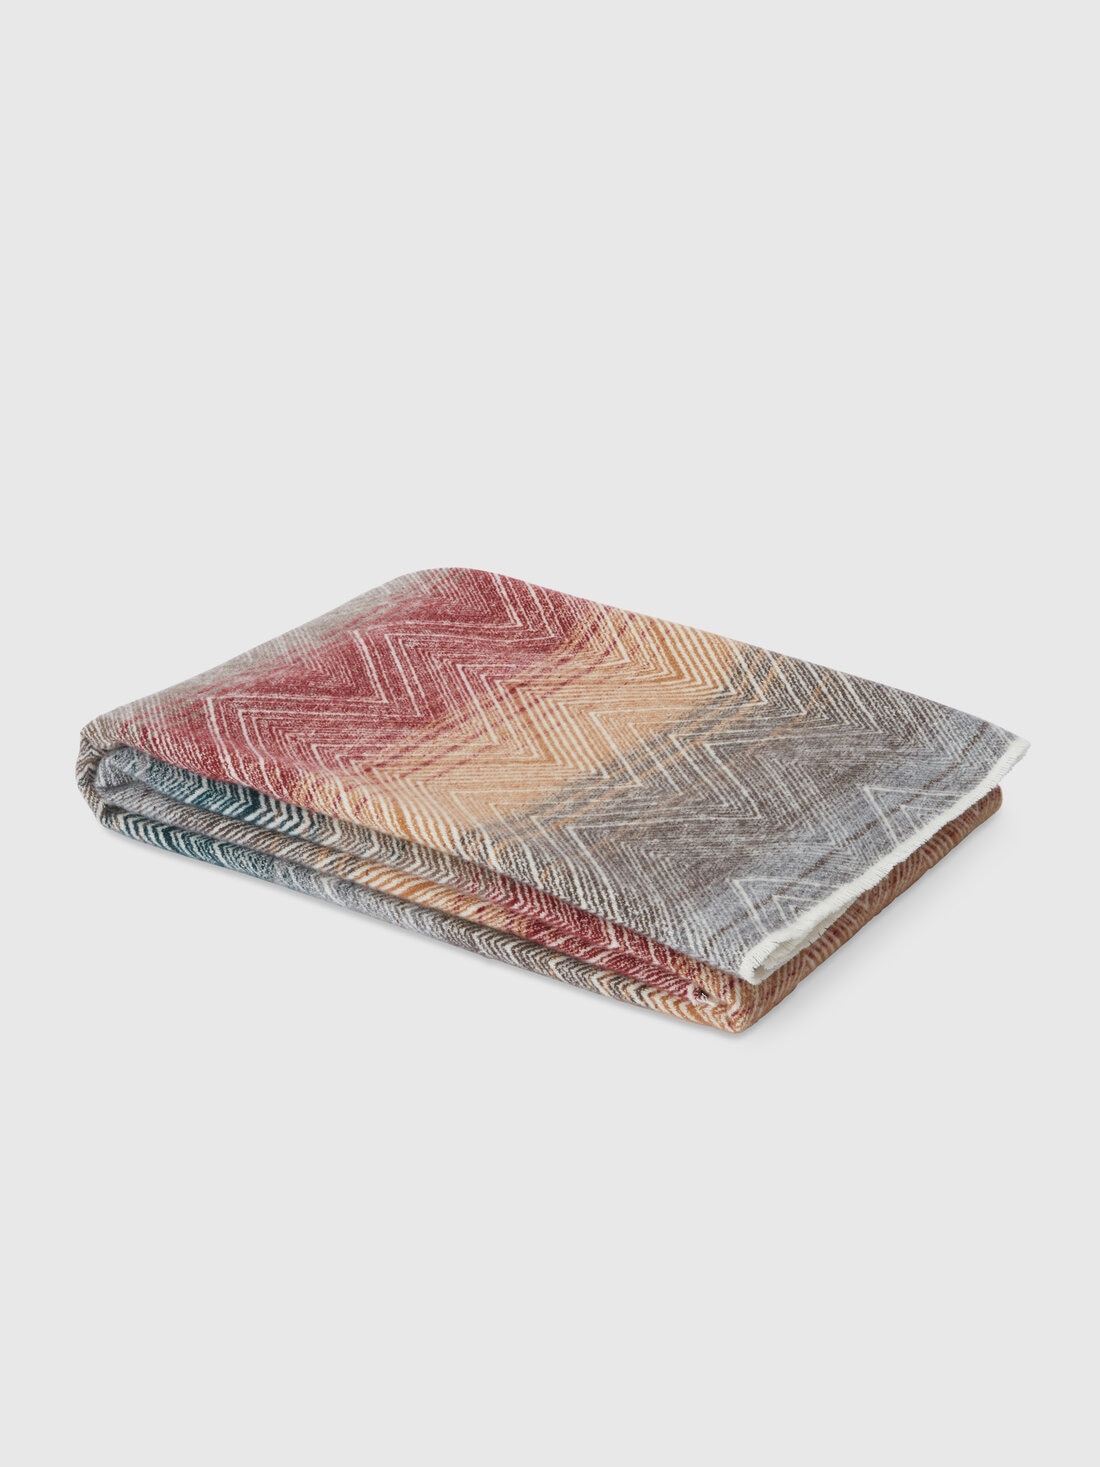 Marea 130x190 cm wool plaid blanket with chevron pattern , Multicoloured  - 8053147134765 - 0